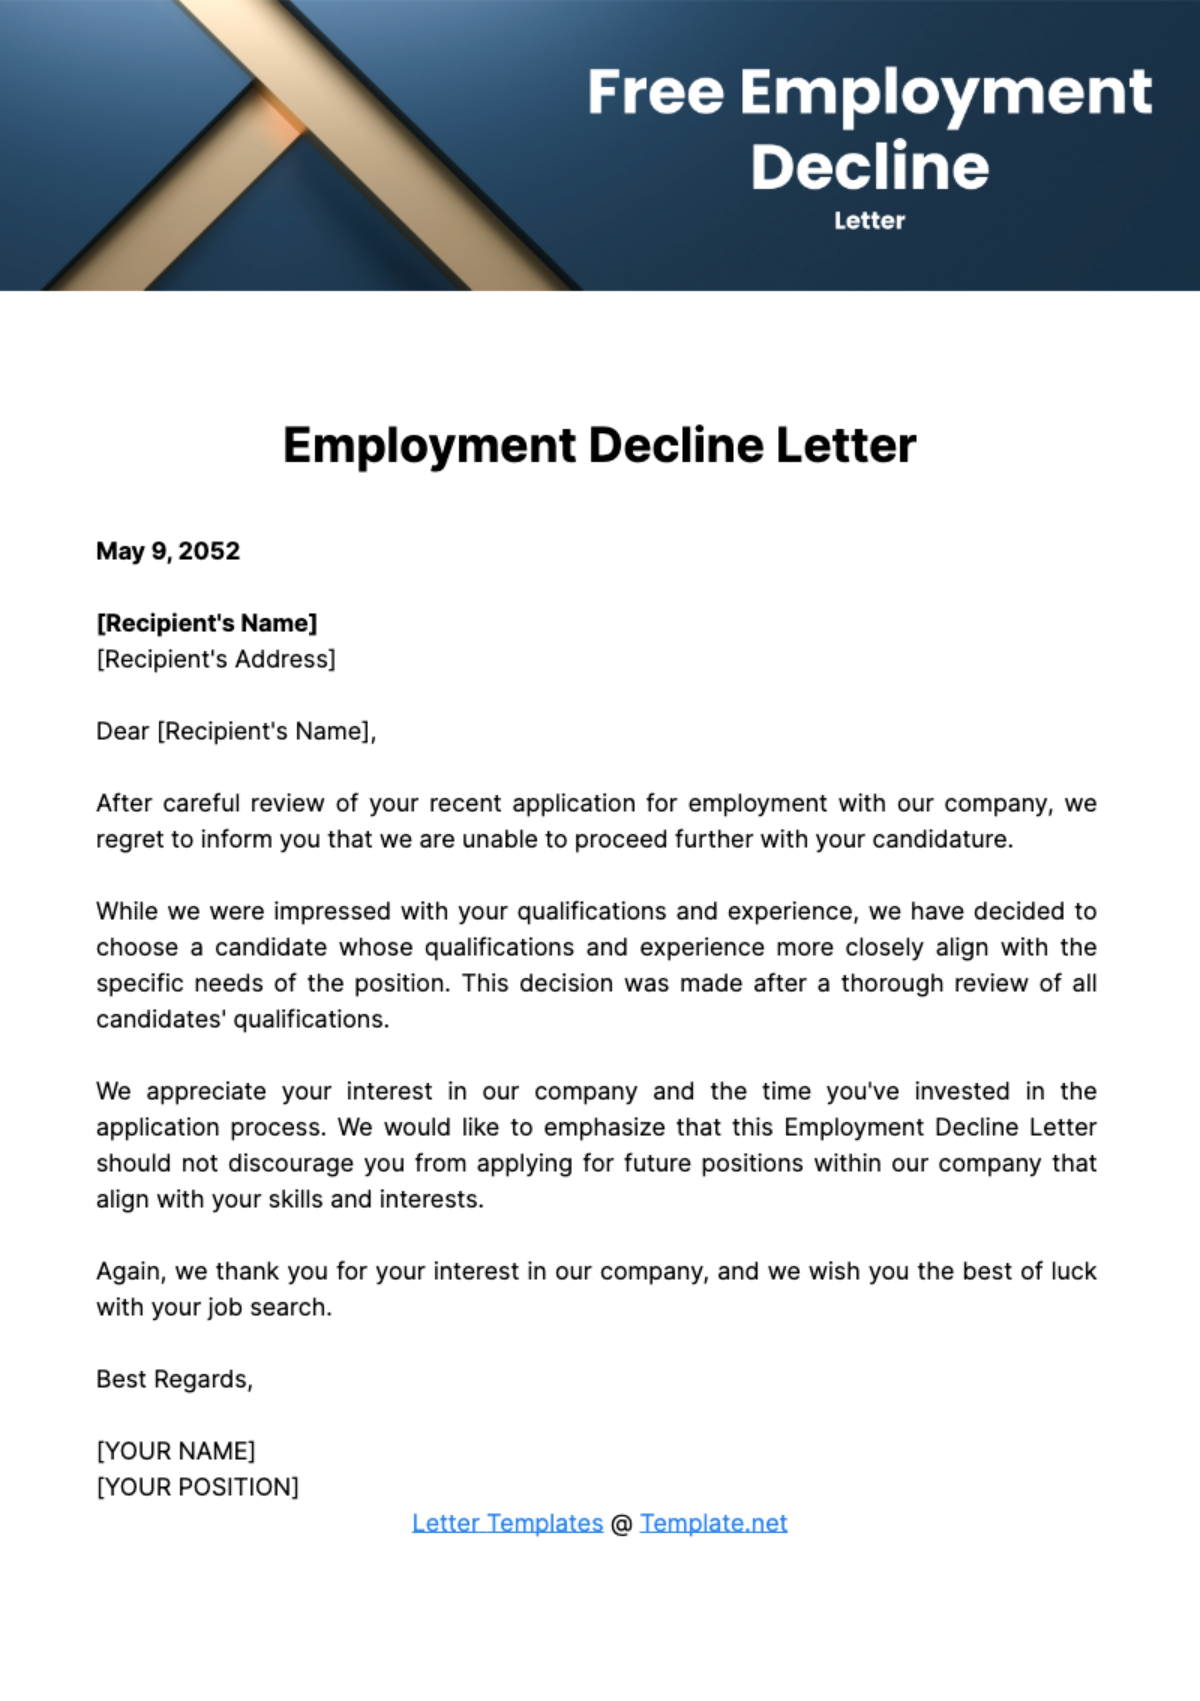 Employment Decline Letter Template